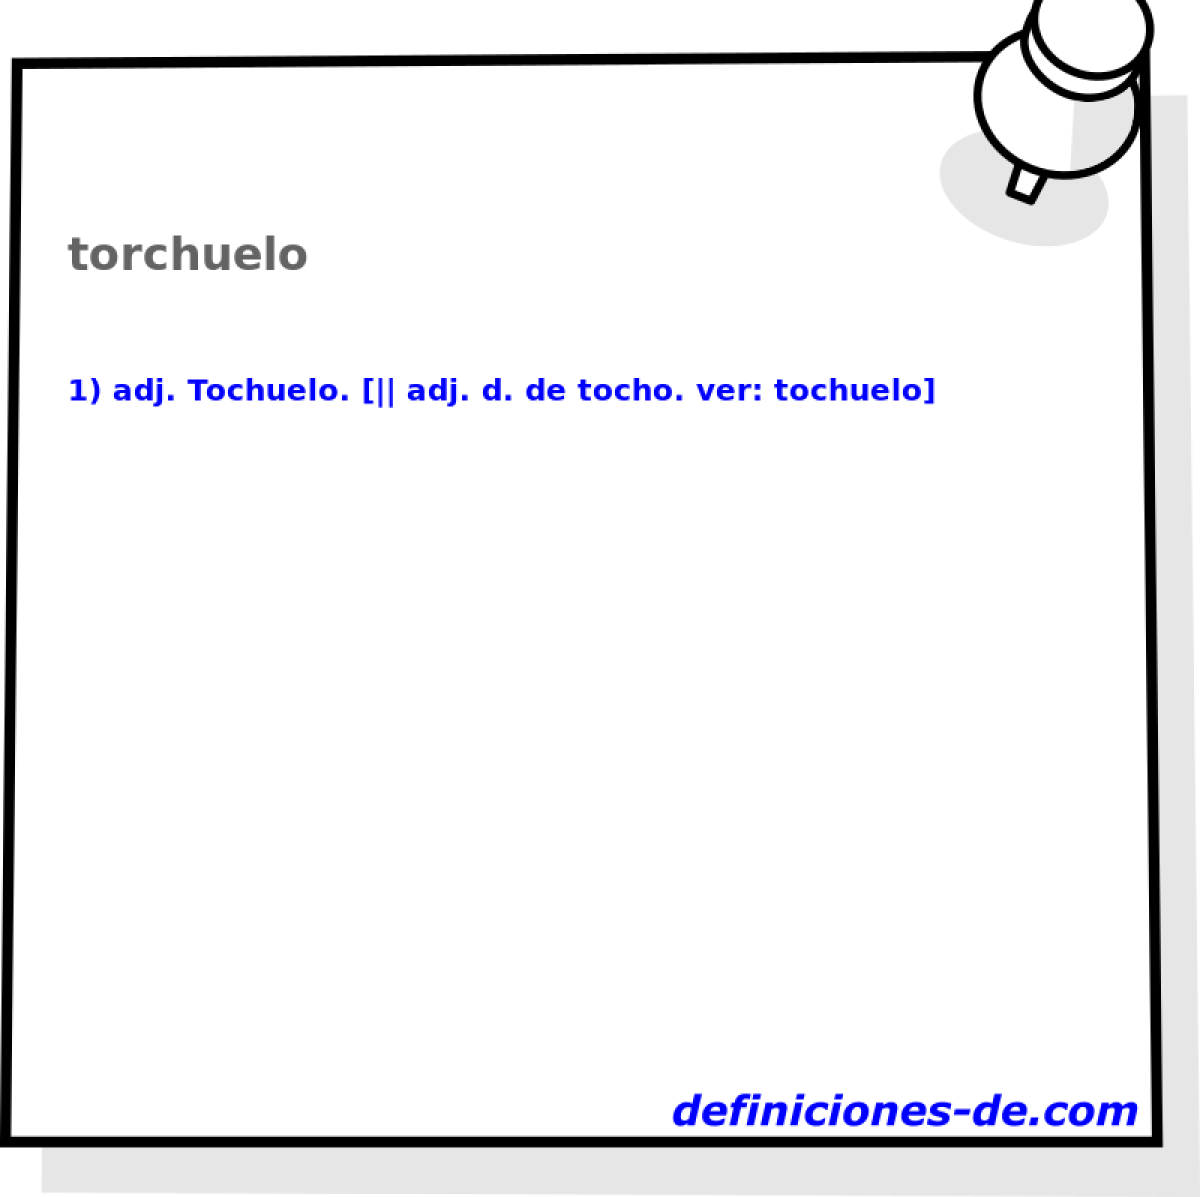 torchuelo 